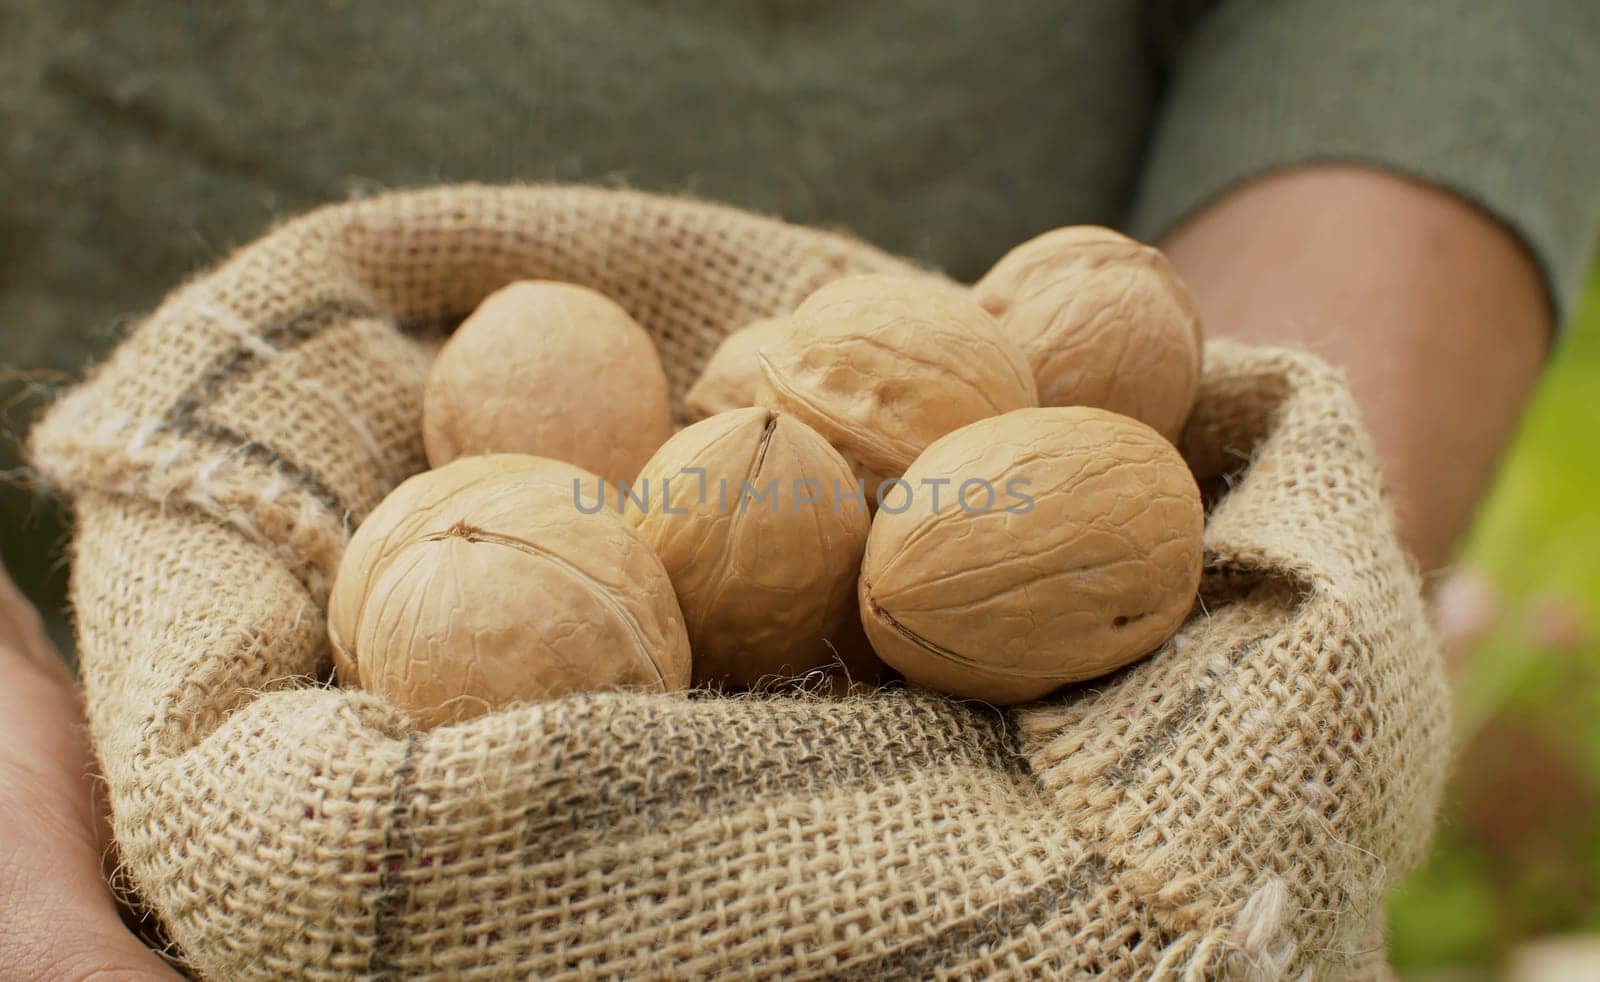 Walnuts in a burlap jute sack by Alize